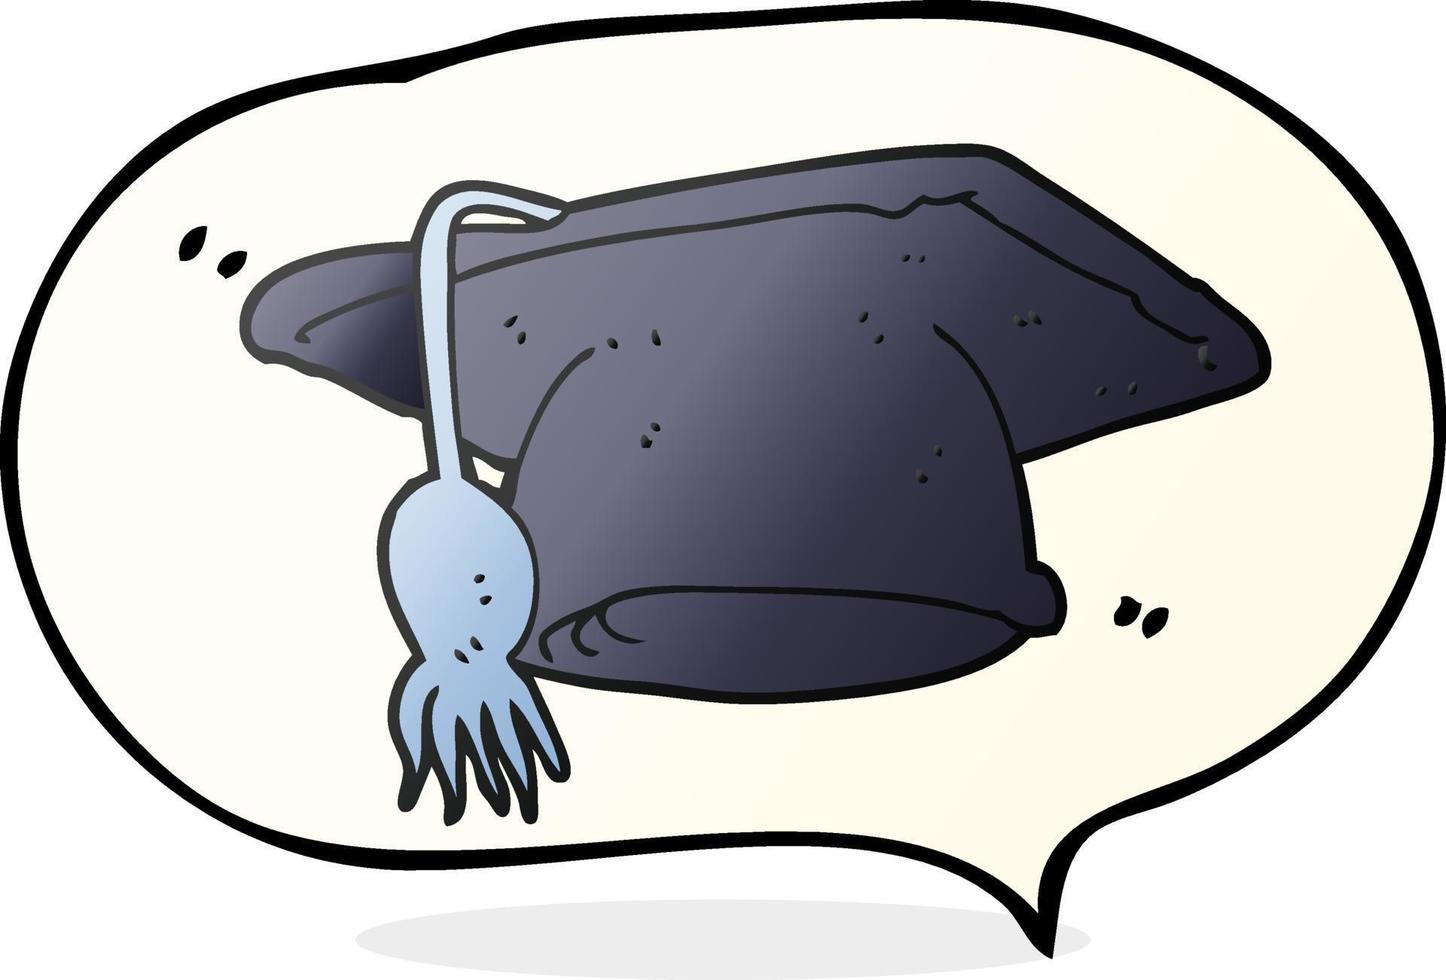 freehand drawn speech bubble cartoon graduation cap vector